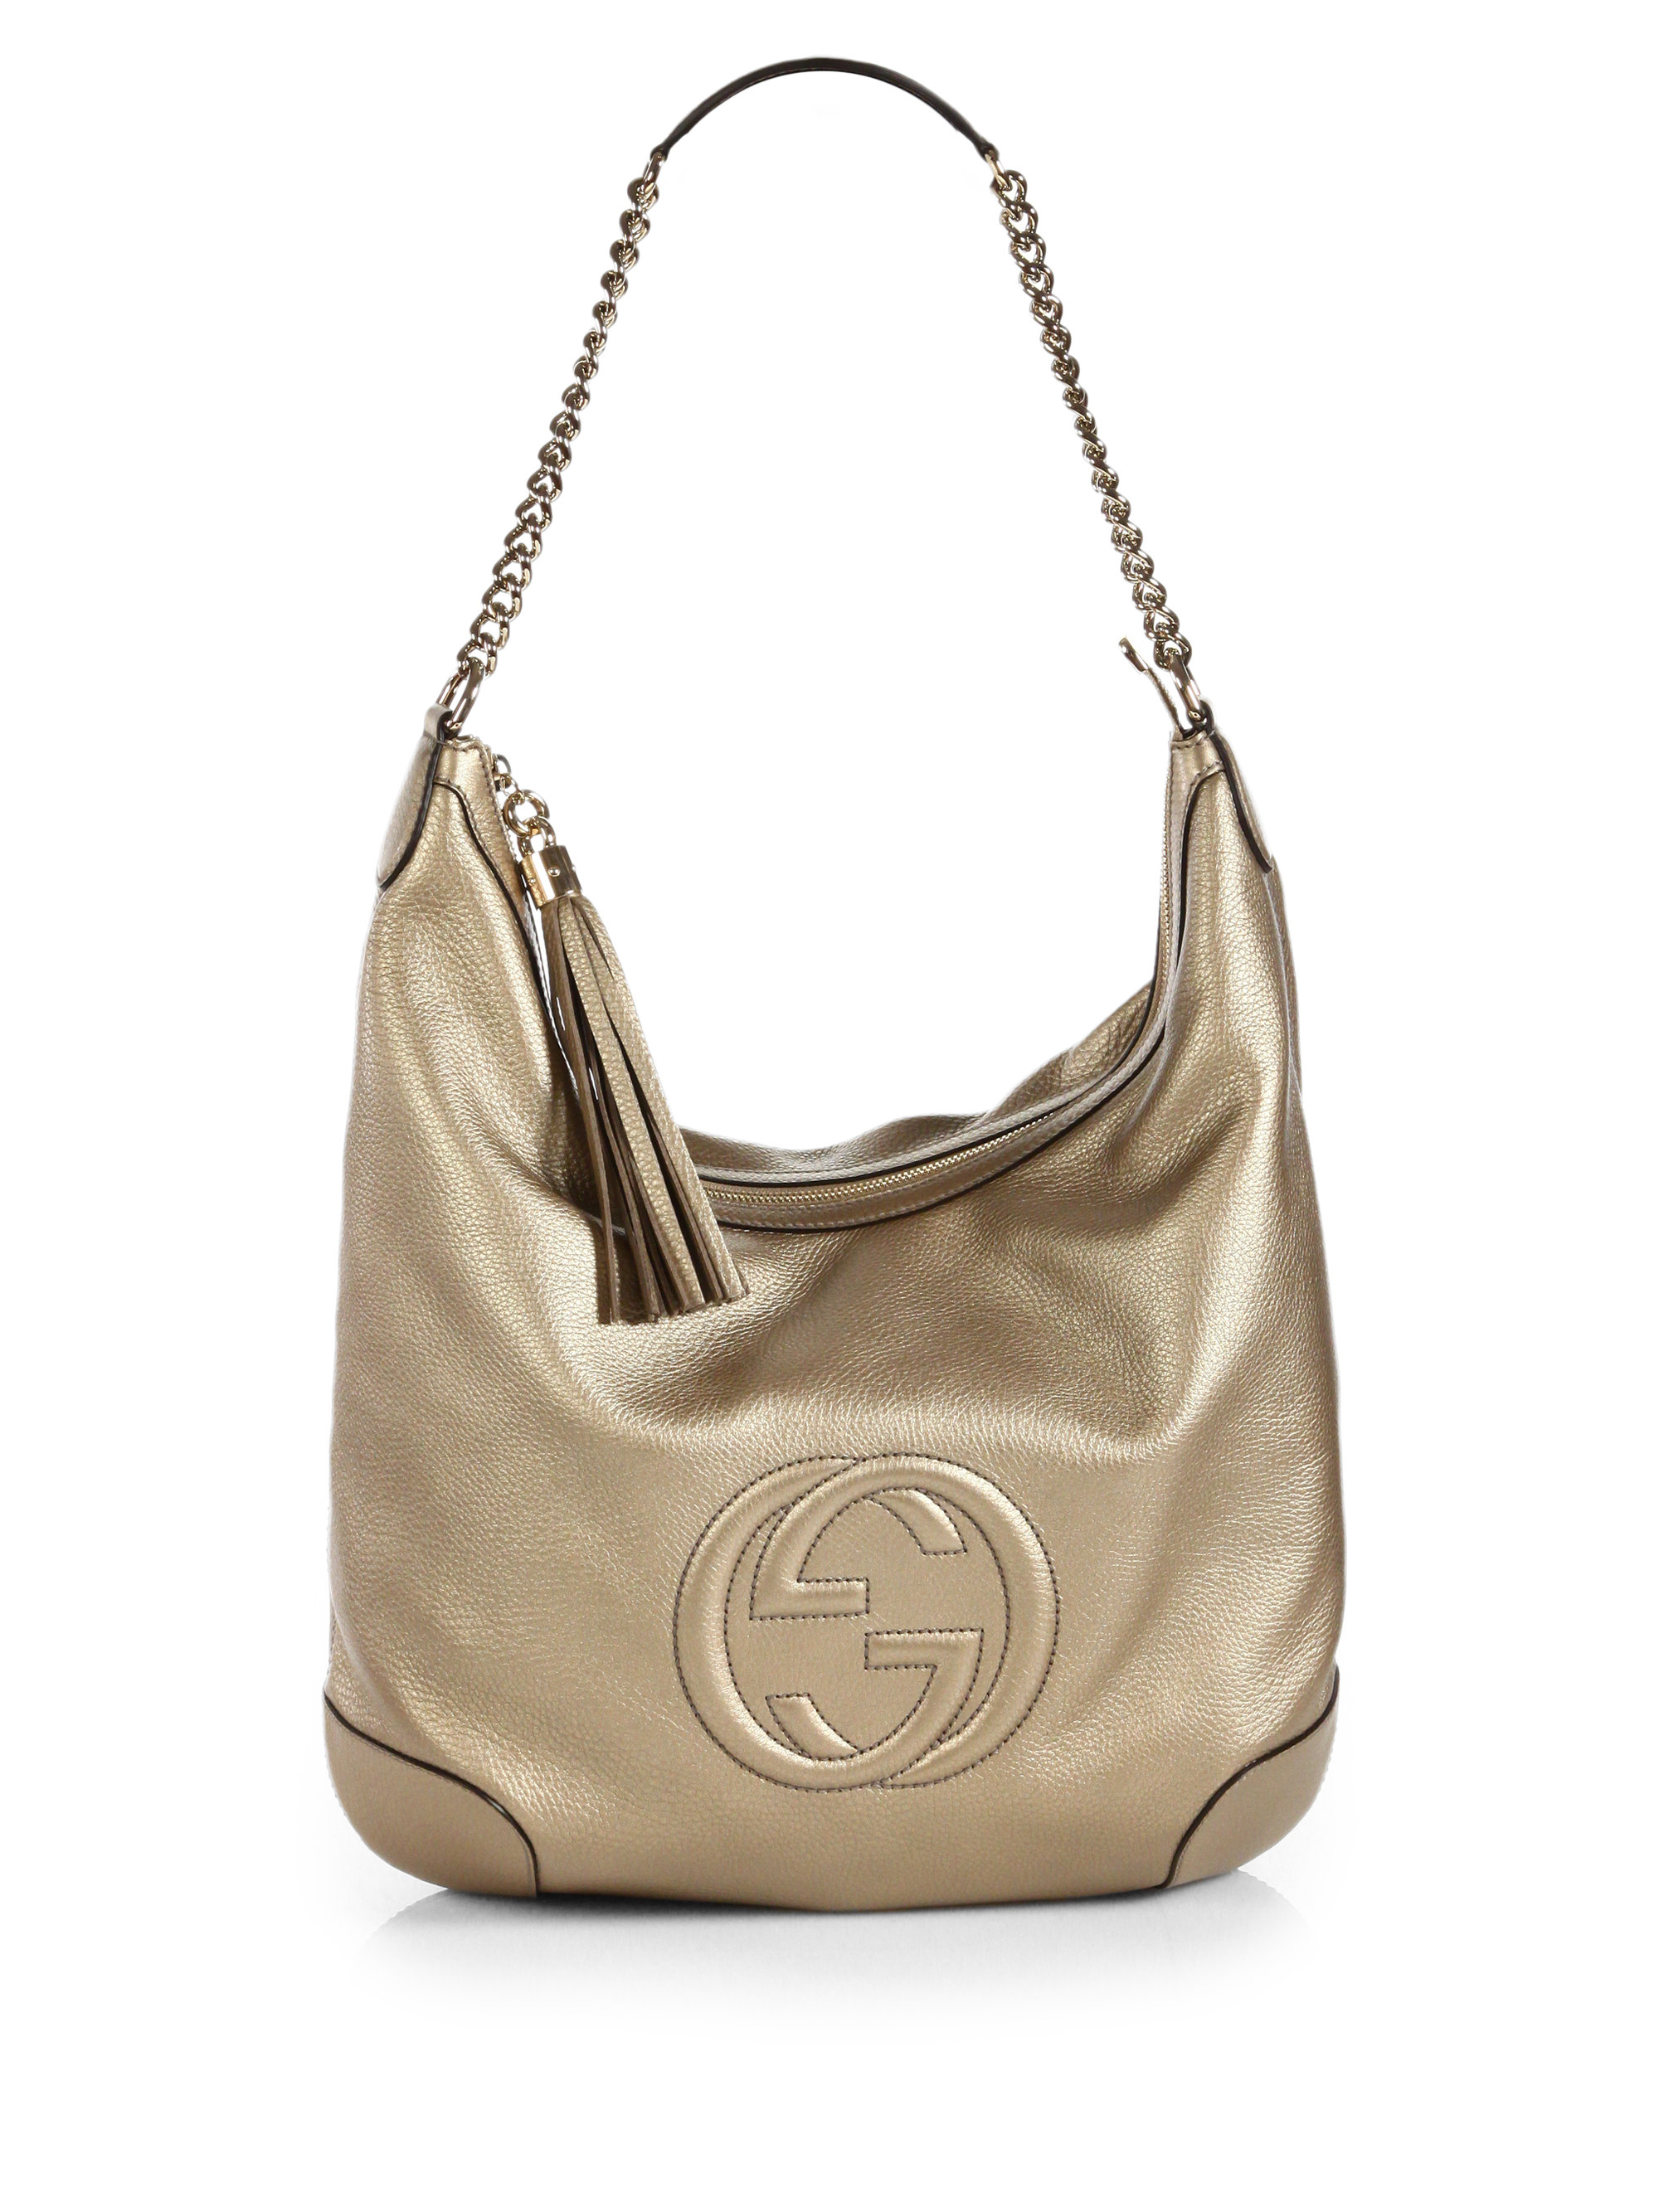 Gucci Soho Metallic Leather Chain Shoulder Bag in Metallic - Lyst